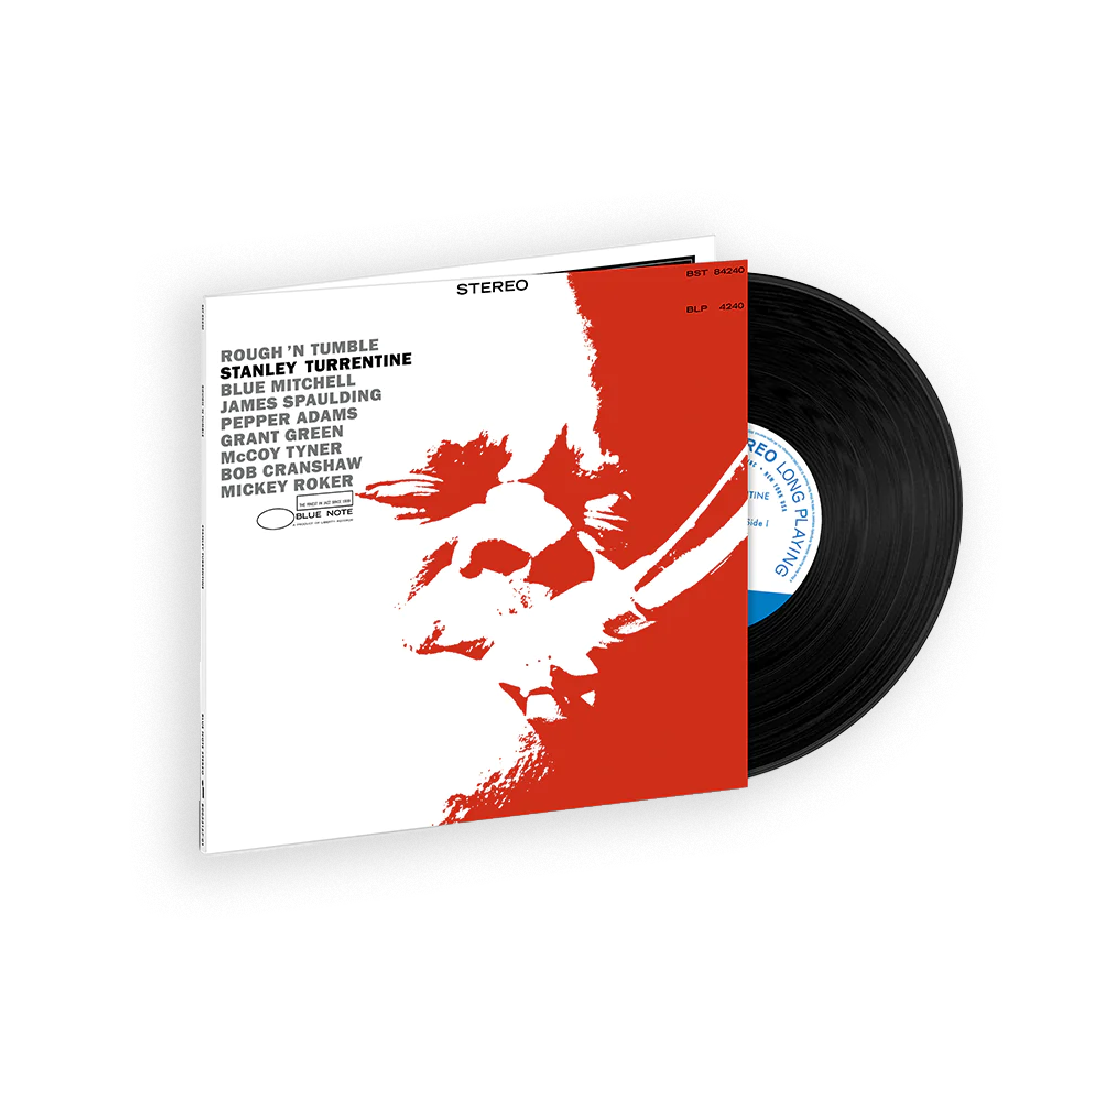 Stanley Turrentine - Rough ‘N Tumble (Tone Poet Vinyl Edition): Vinyl LP